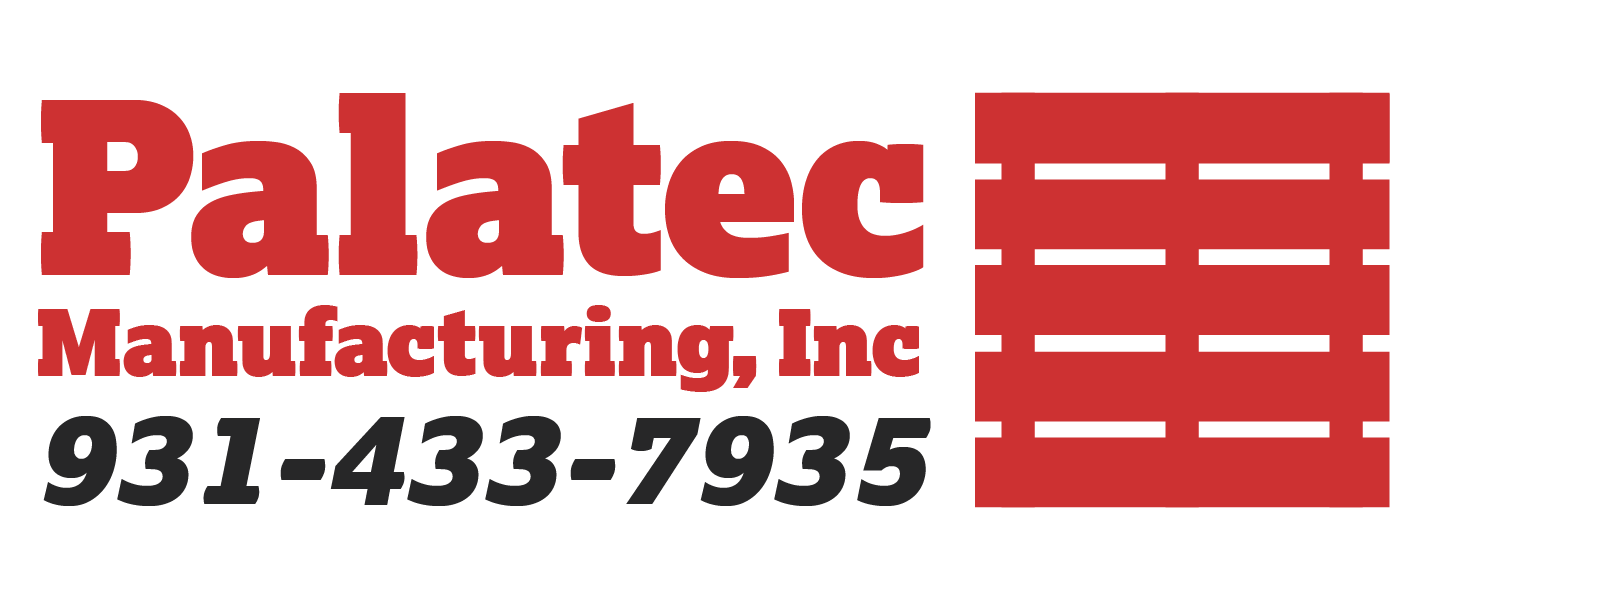 Palatec Manufacturing Inc